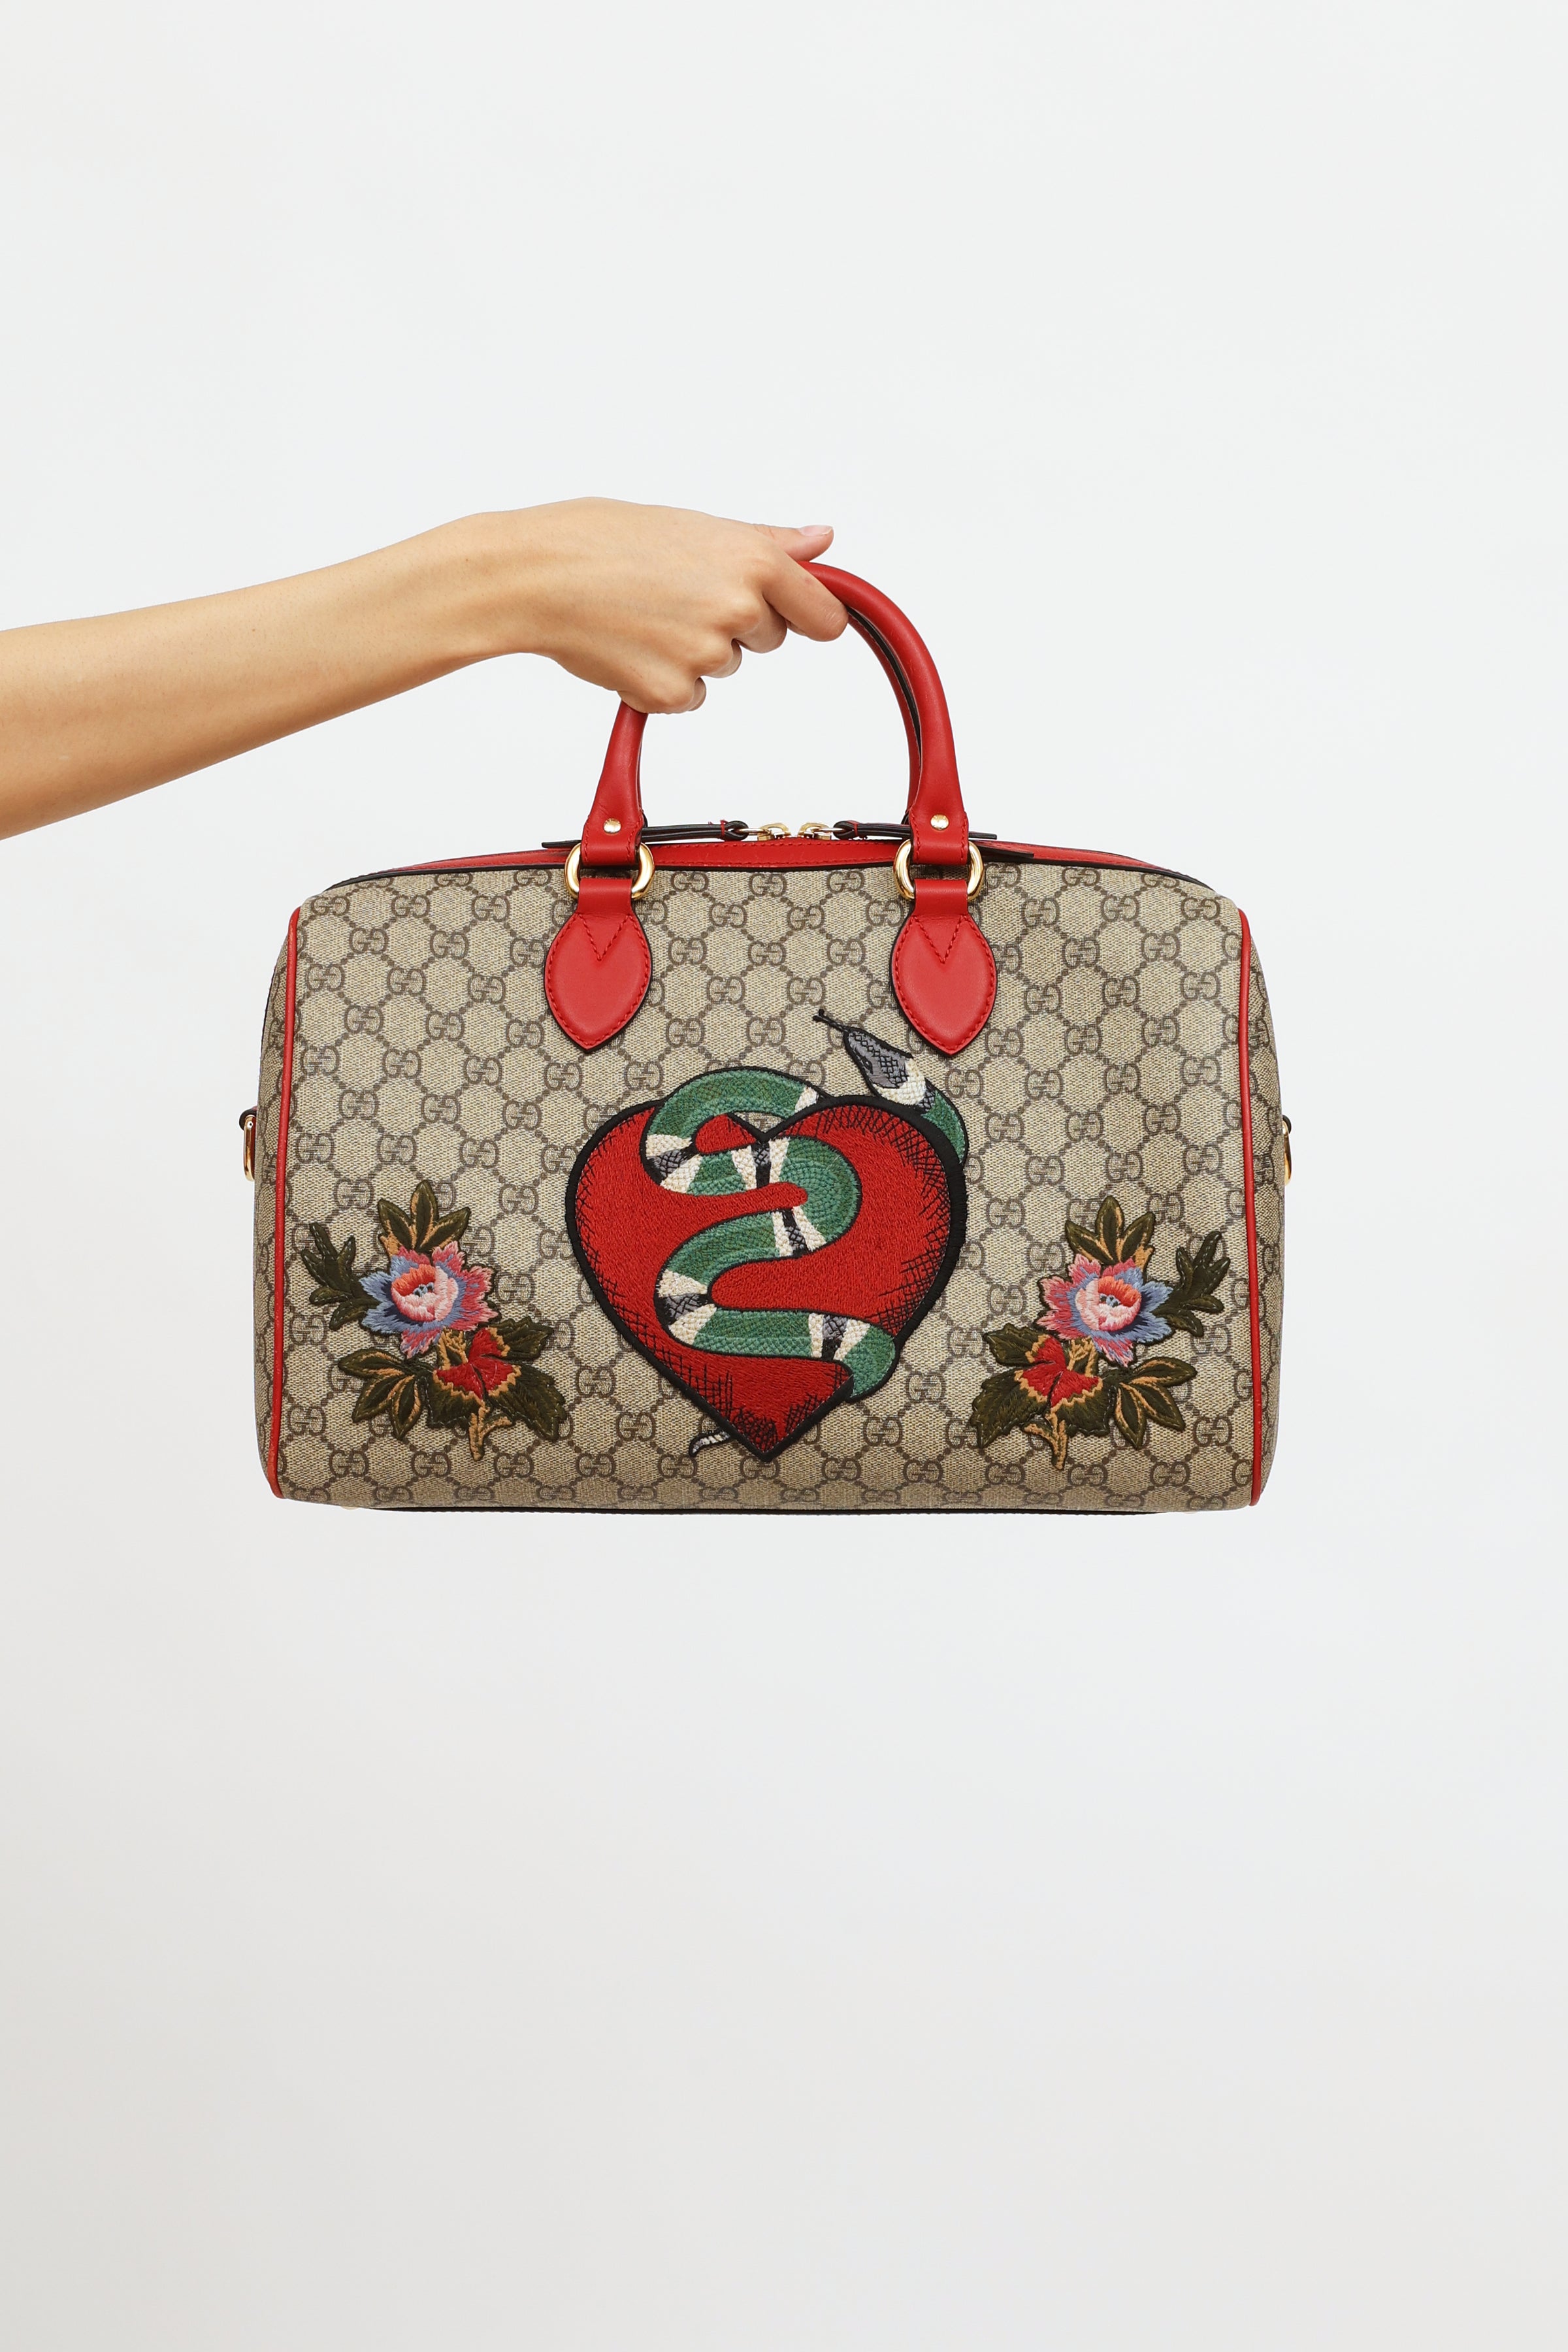 Gucci GG Supreme Embroidered Top Handle Boston Bag